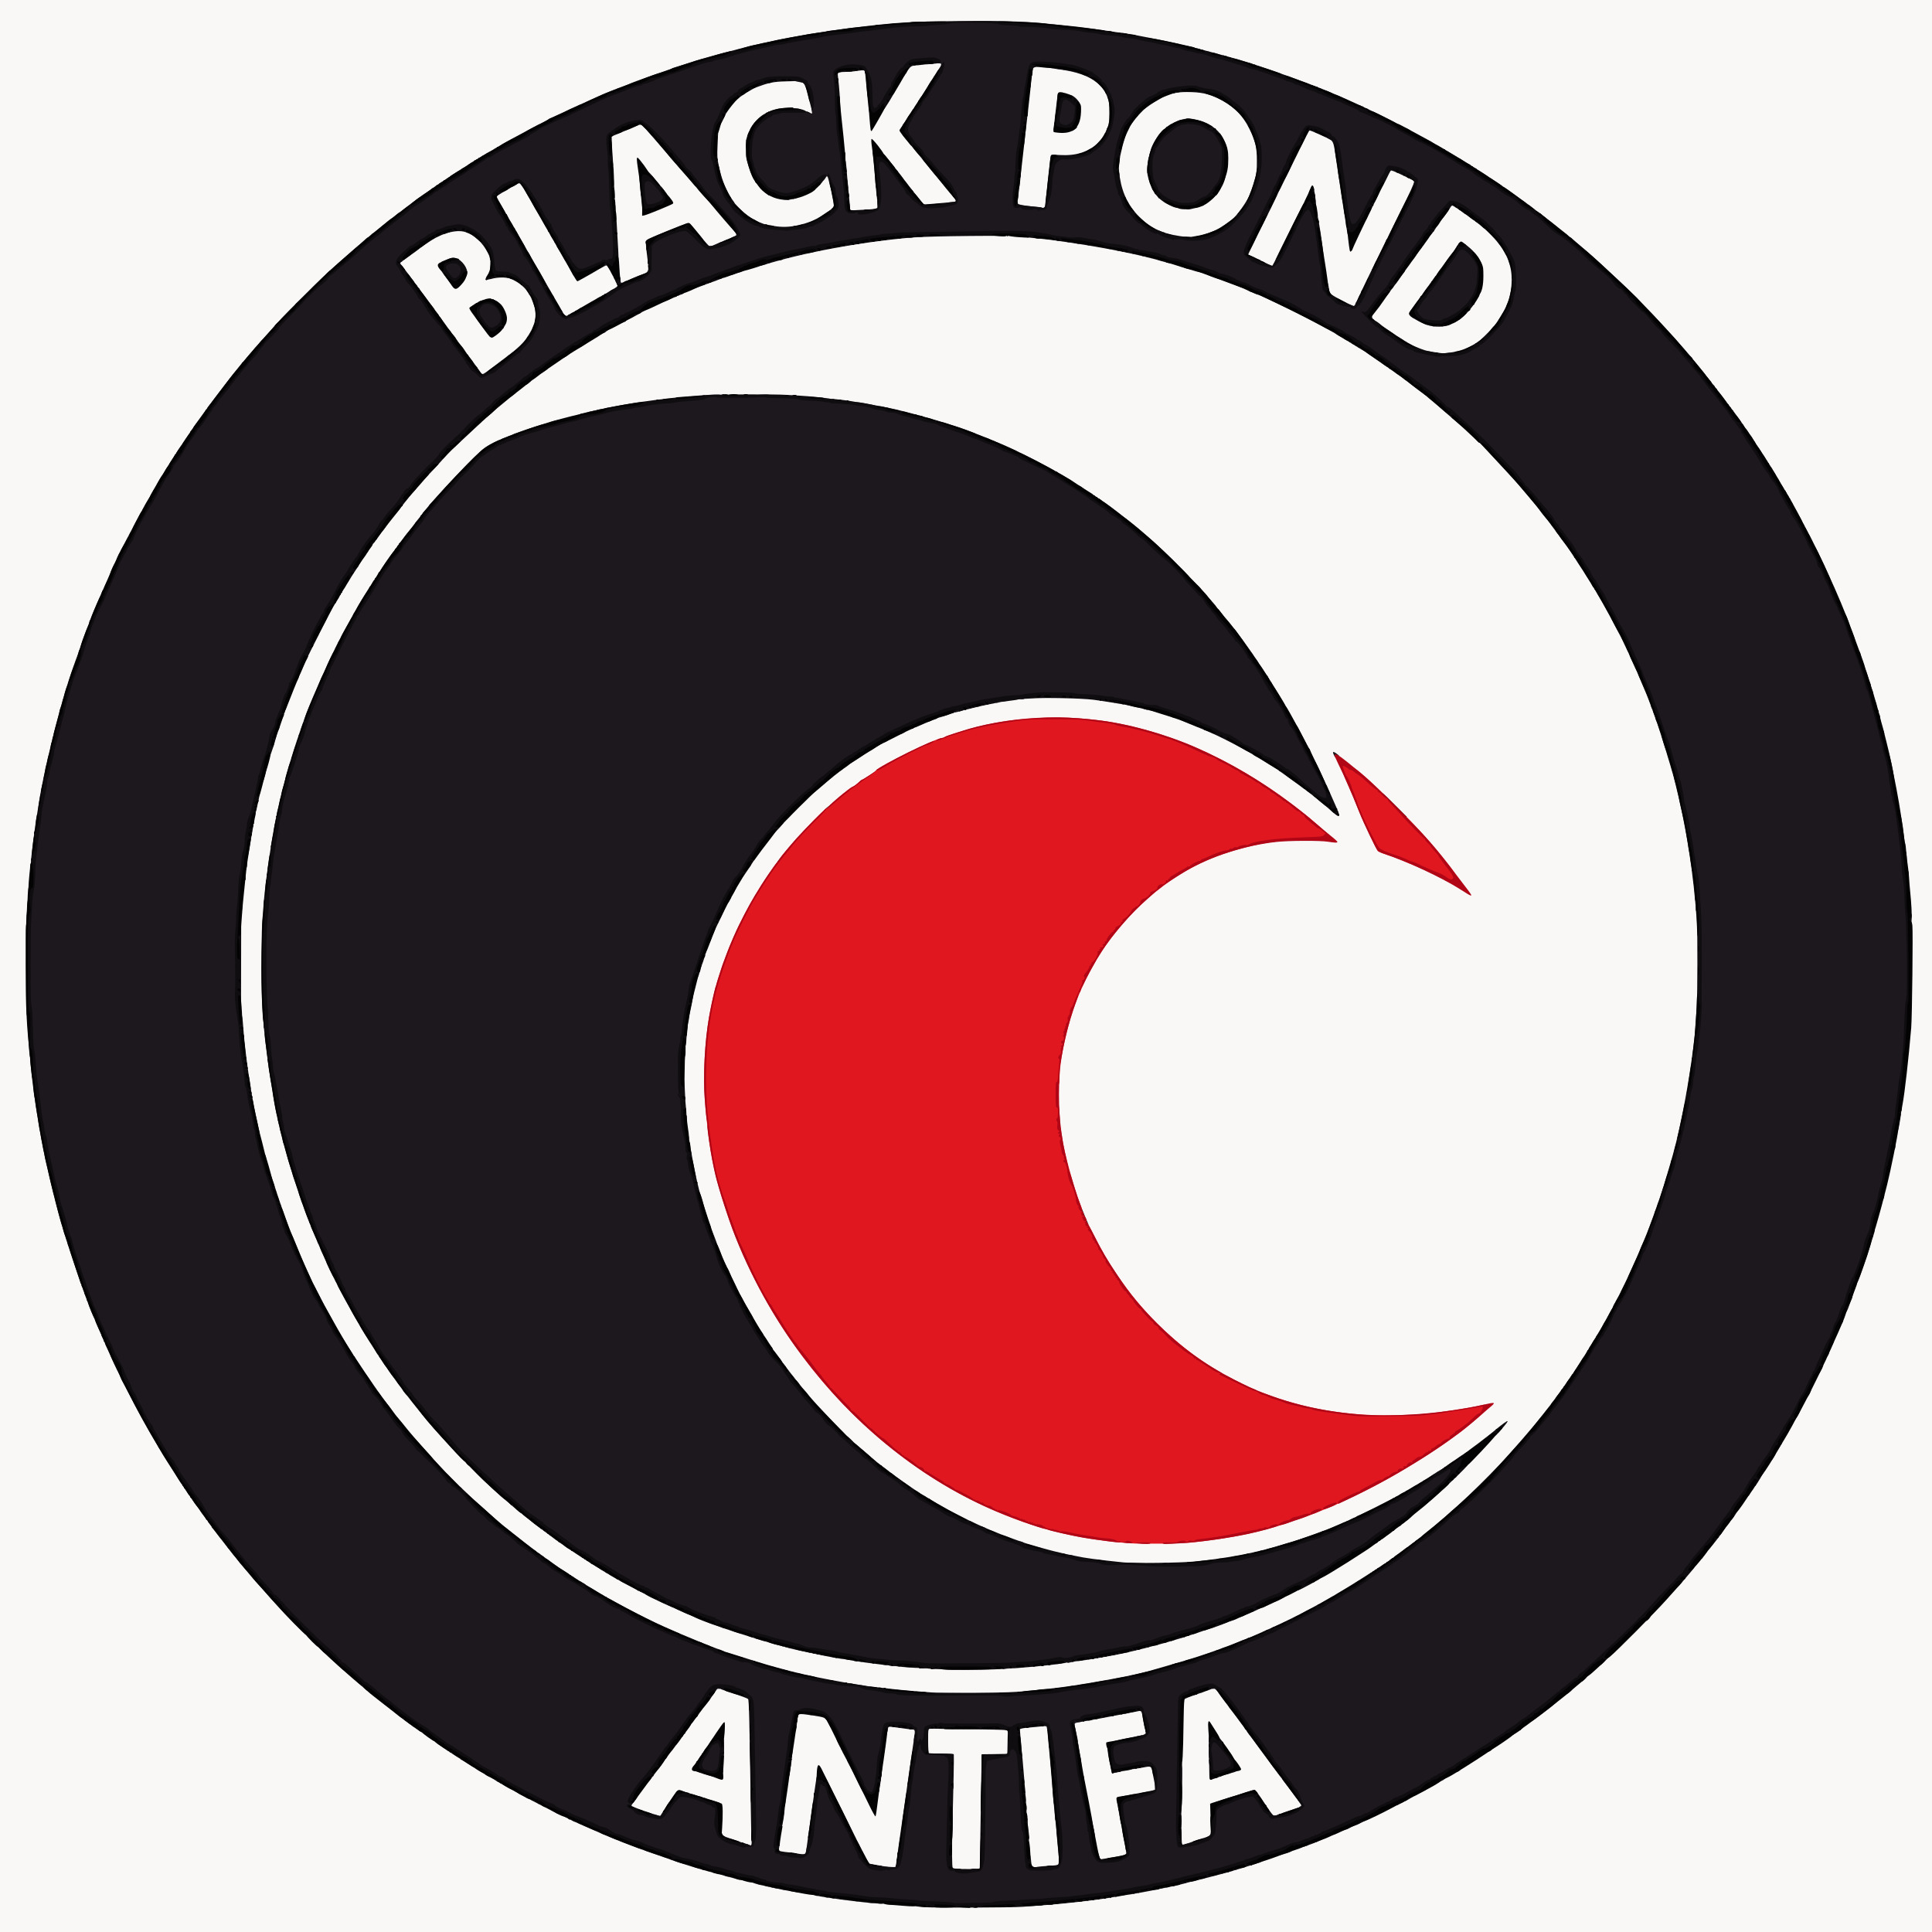 Black pond antifa